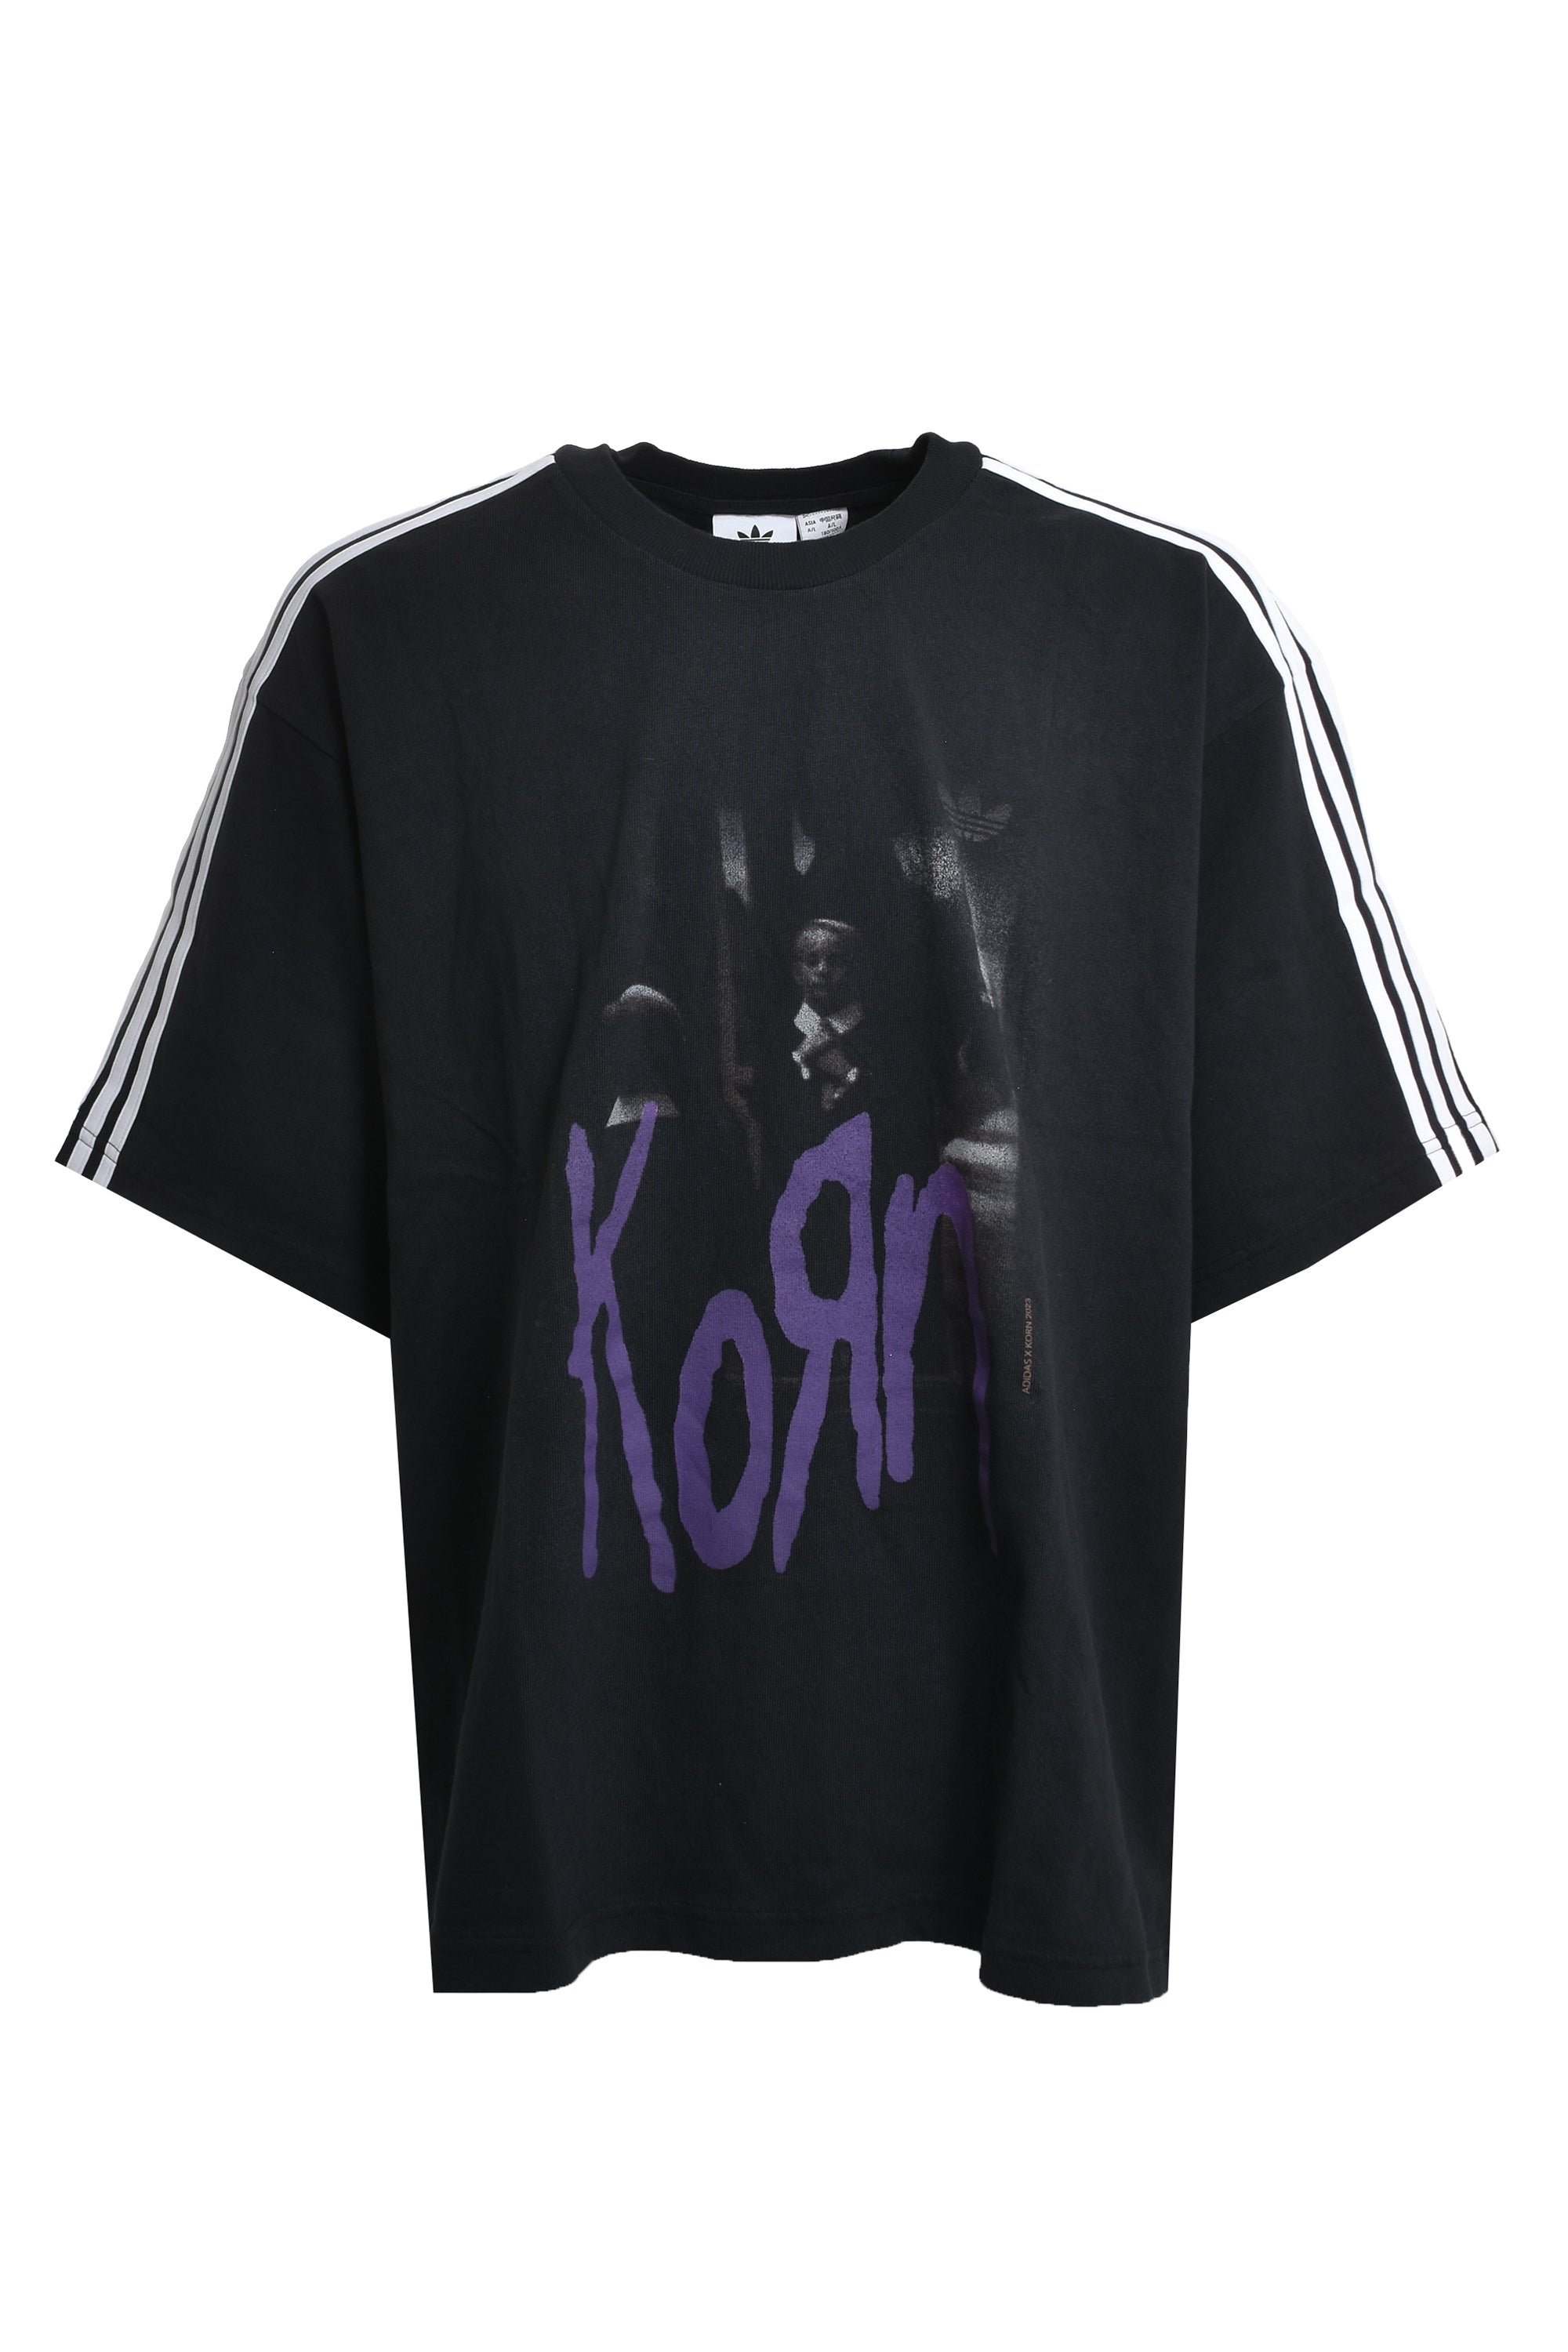 adidas x Korn T-Shirt  Black size 2xl